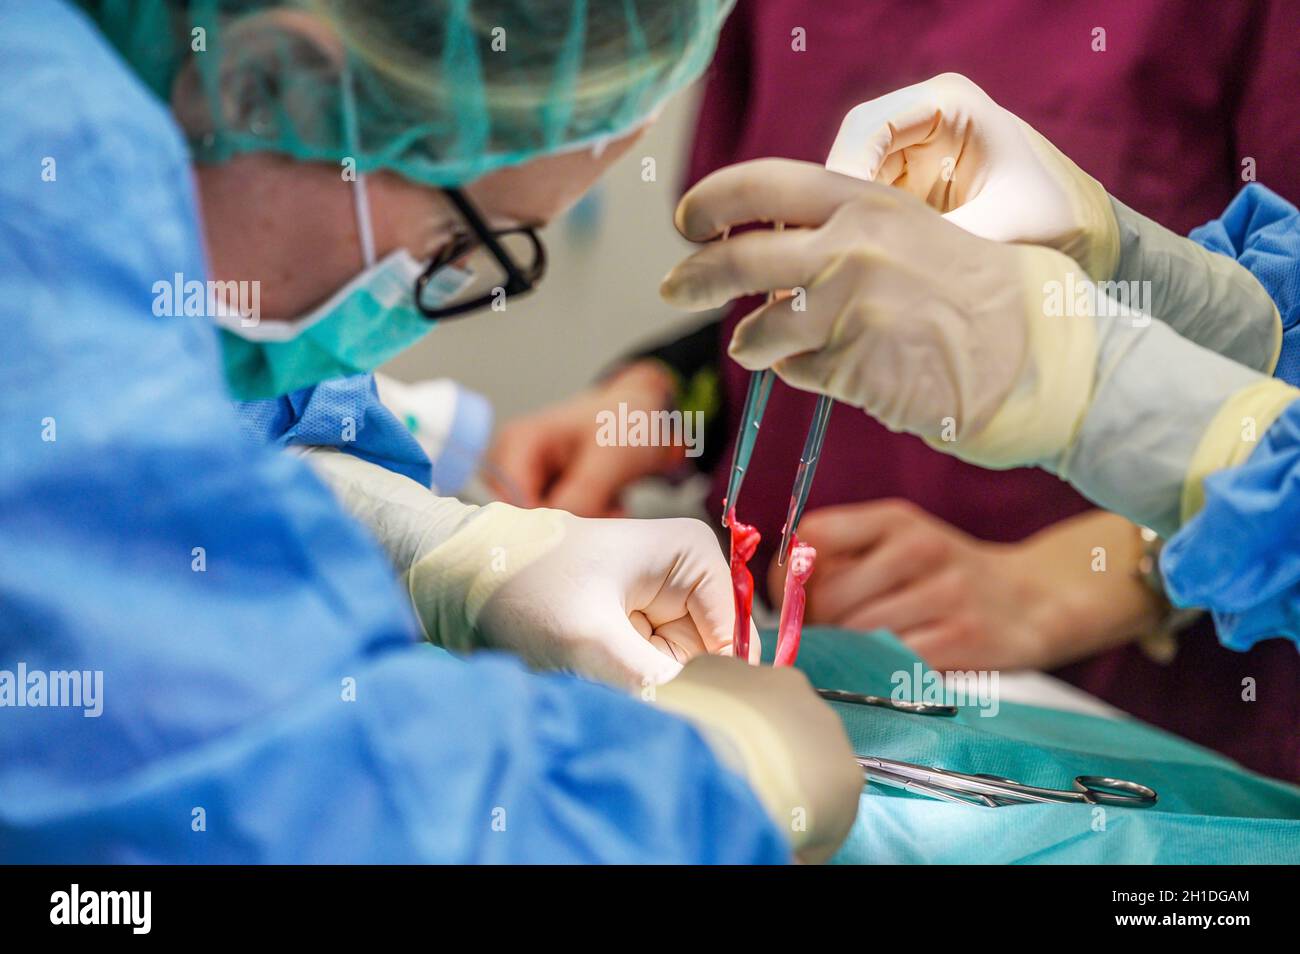 Chirurg in Operationssaal, operiert einen Patienten. Stockfoto